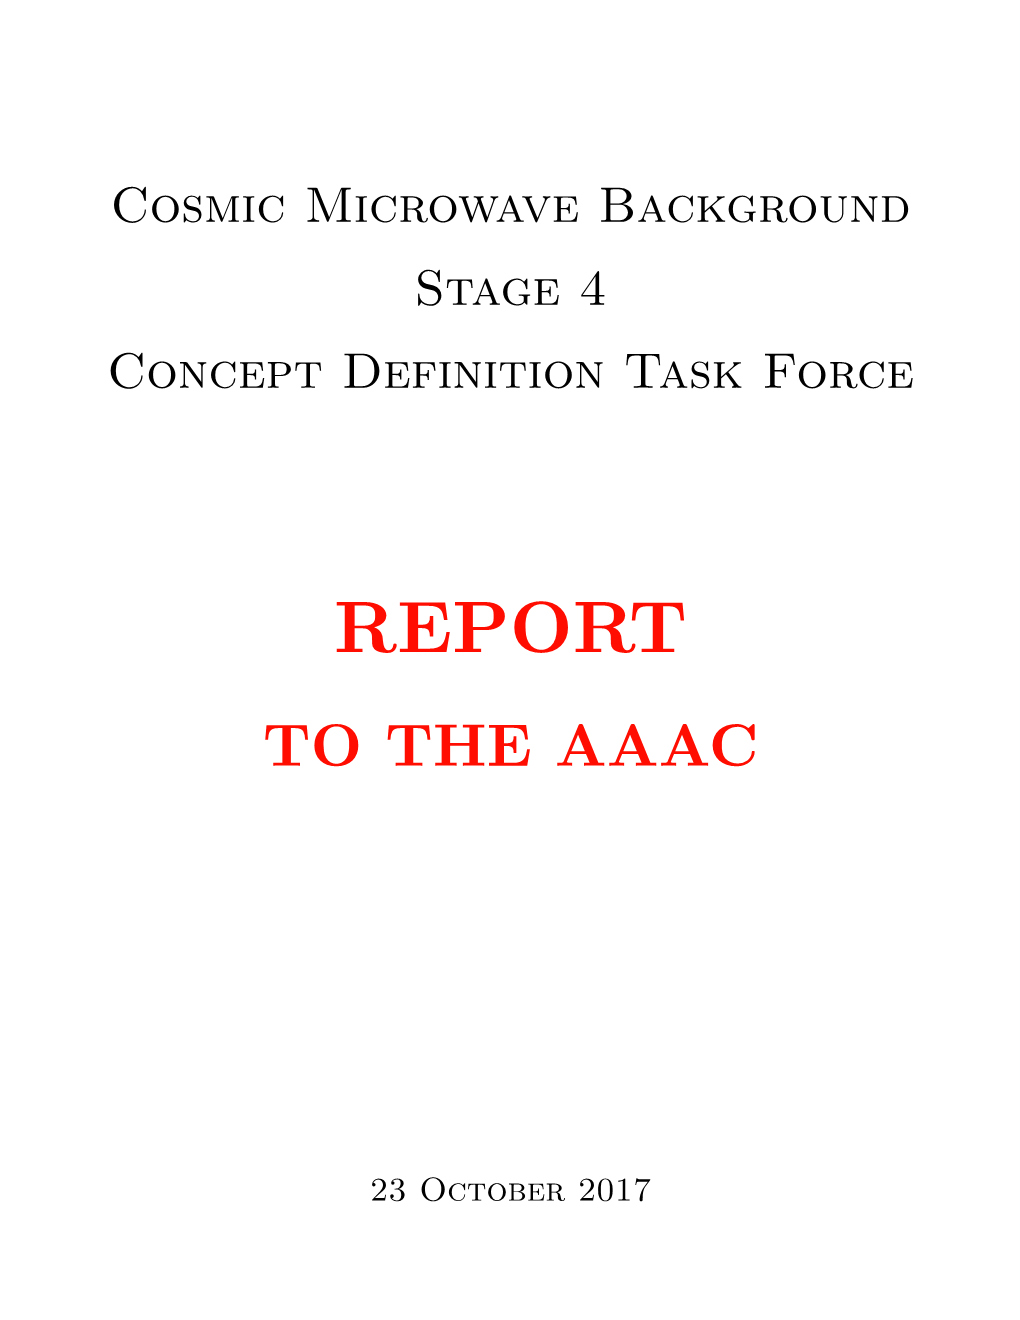 CMB-S4 CDT Final Report